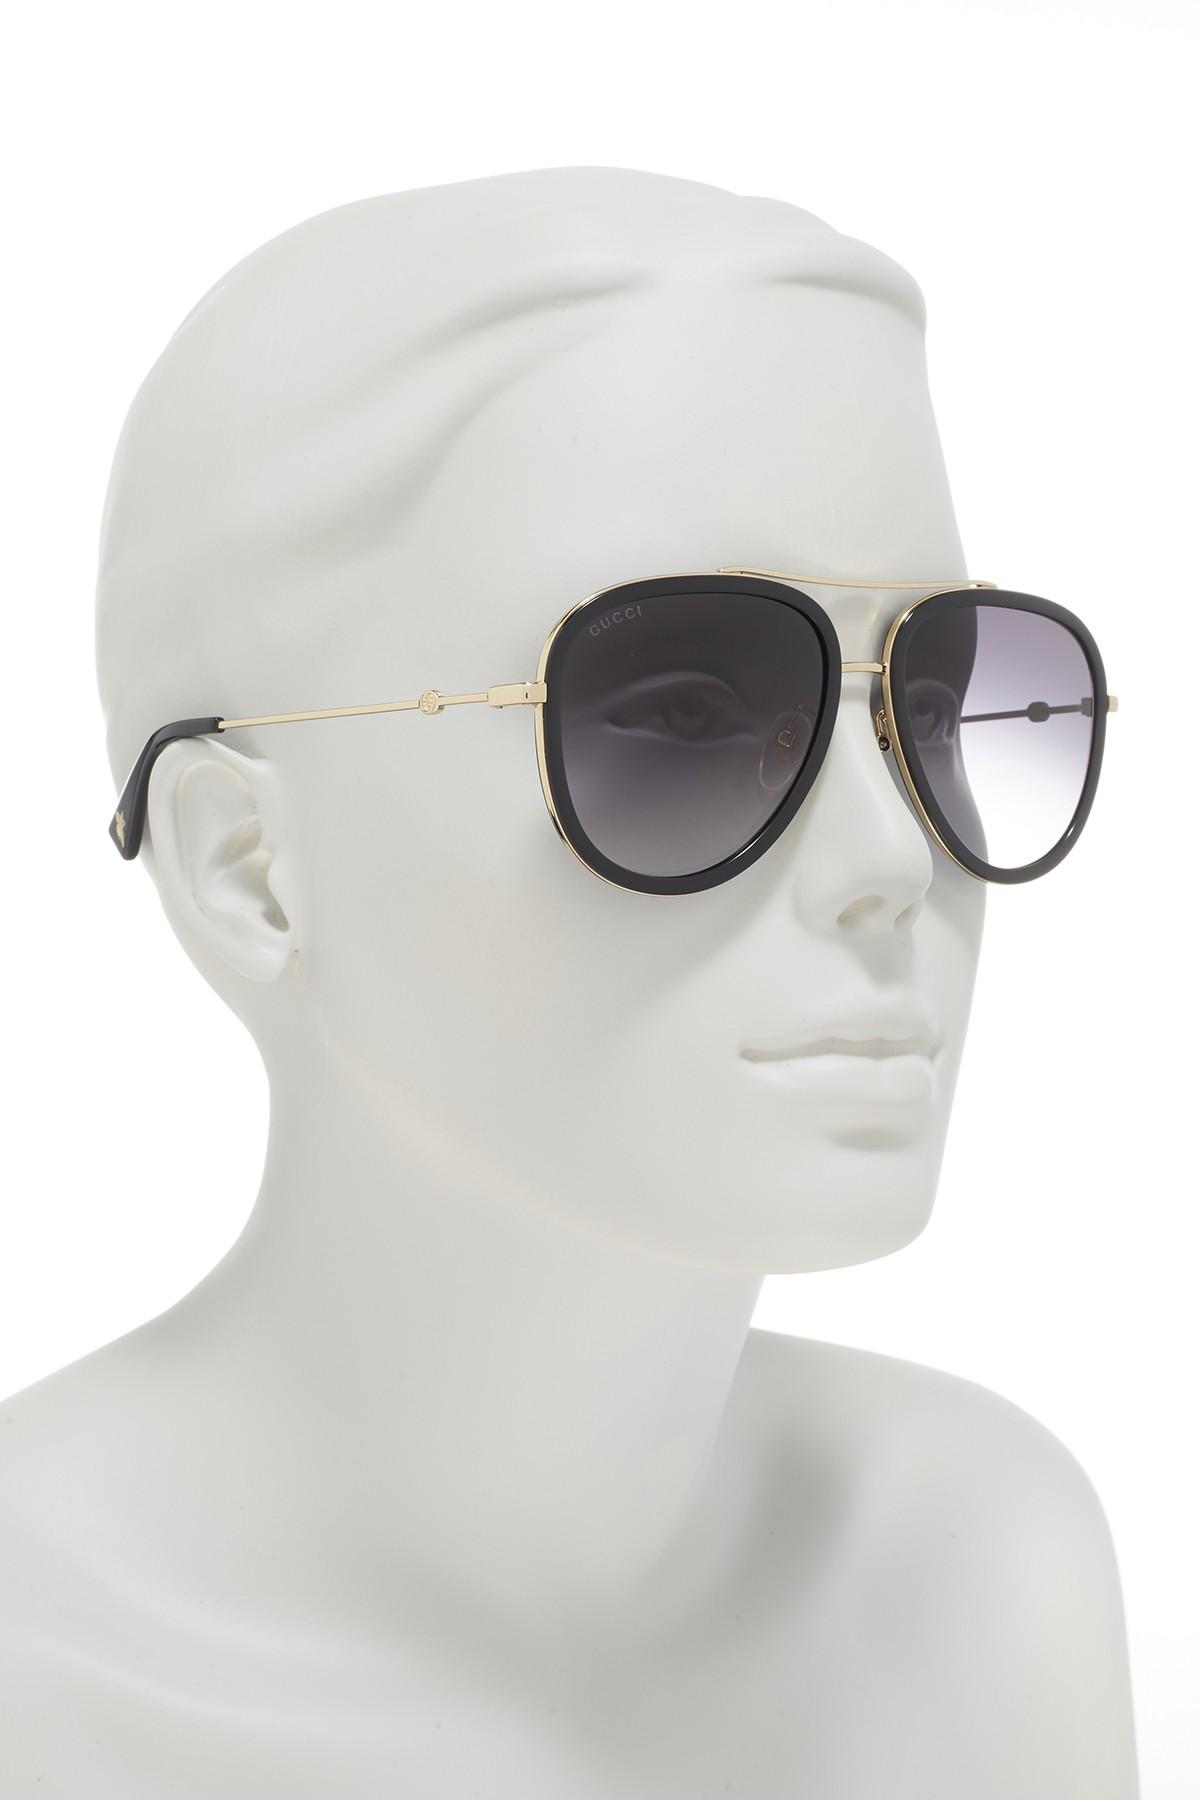 Gucci 57mm Aviator Sunglasses in Grey Gold (Gray) - Lyst